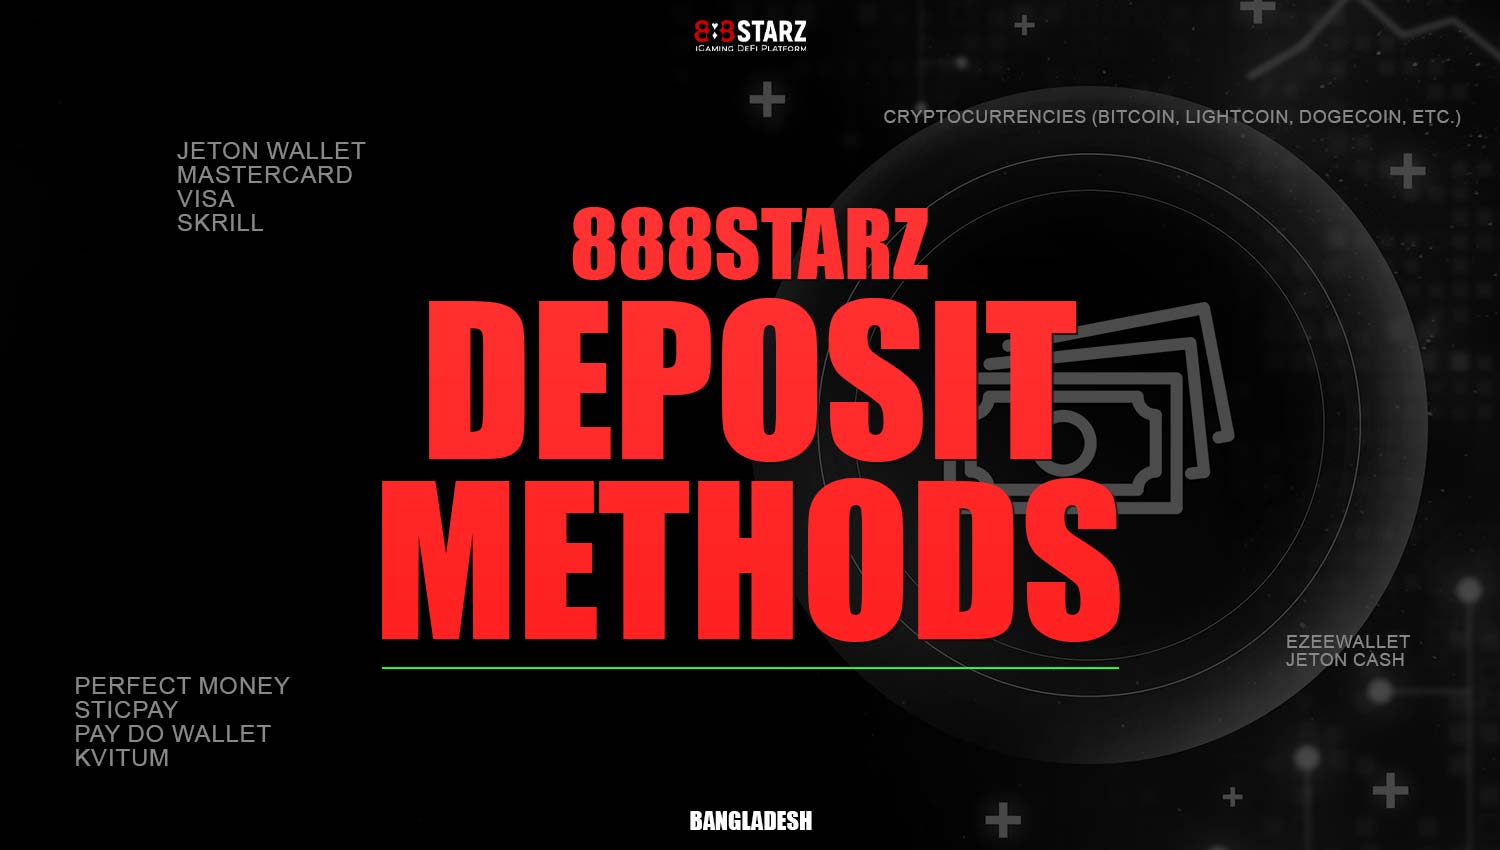 Available deposit methods on the 888Starz platform.